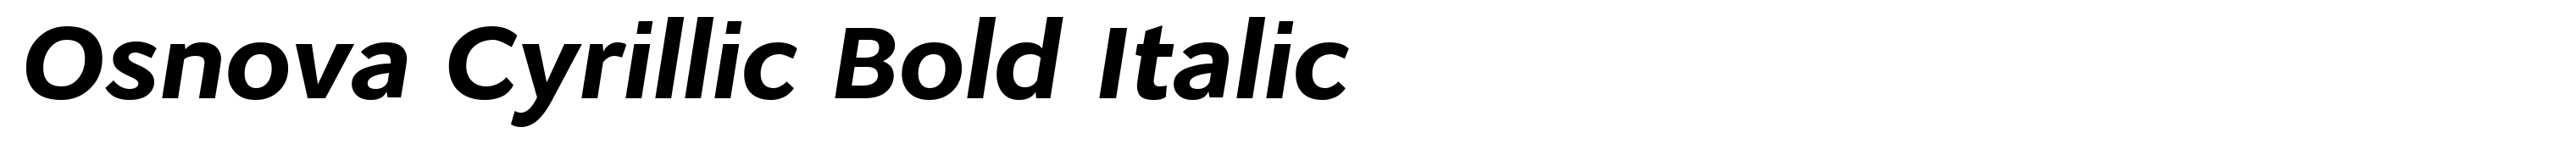 Osnova Cyrillic Bold Italic